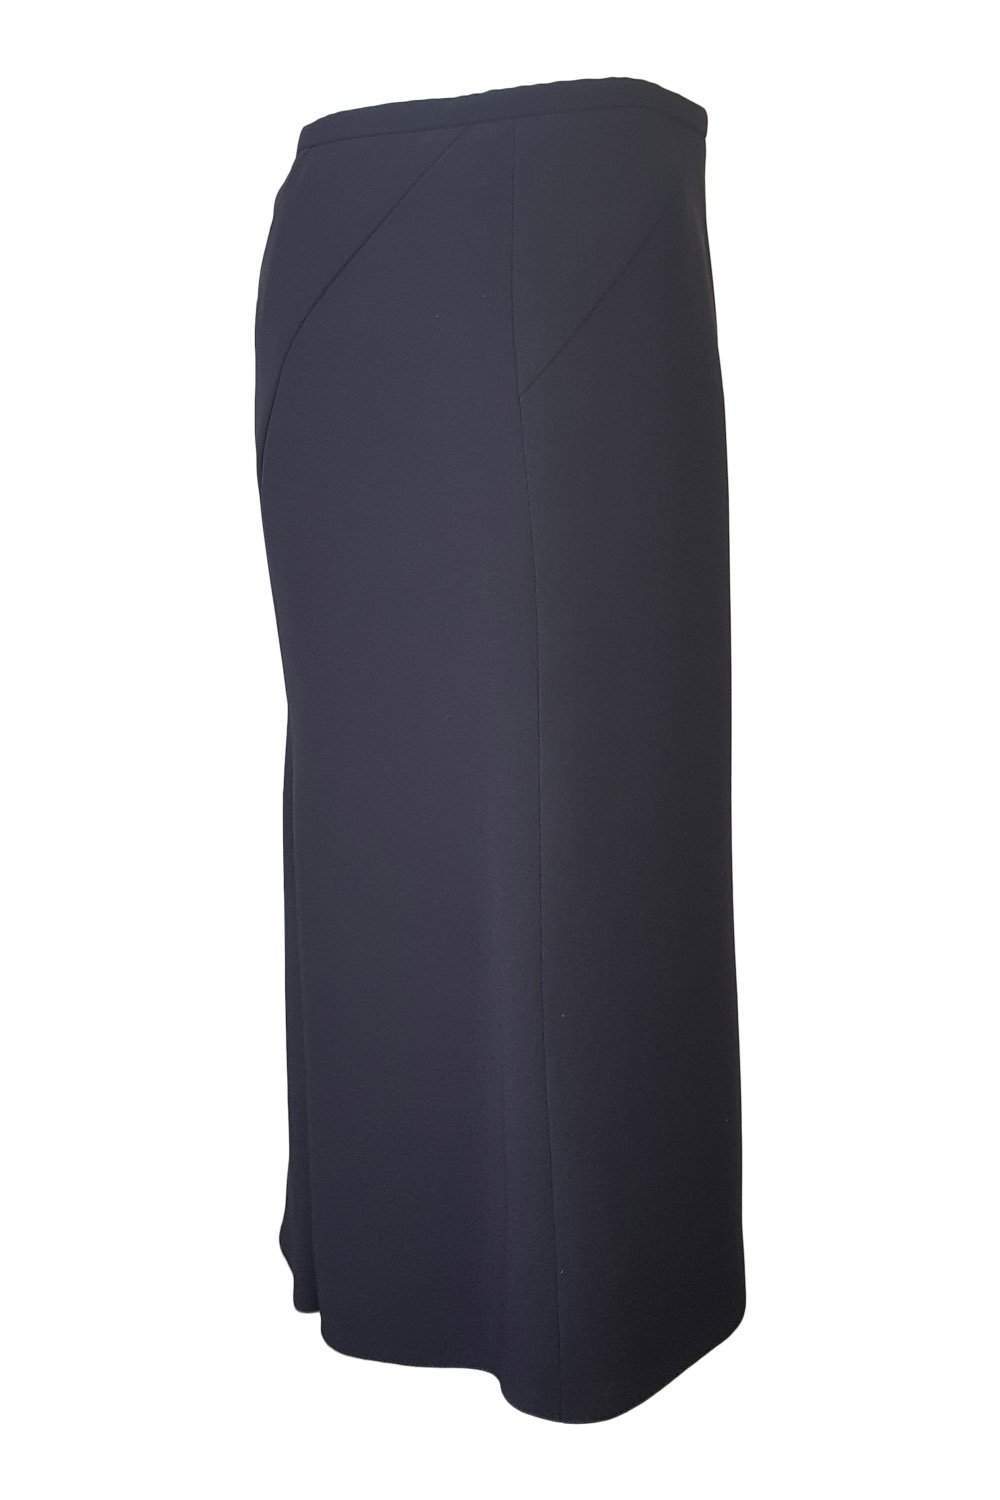 ARMANI Asymmetric Stitch Black Pencil Skirt (40)-Armani-The Freperie